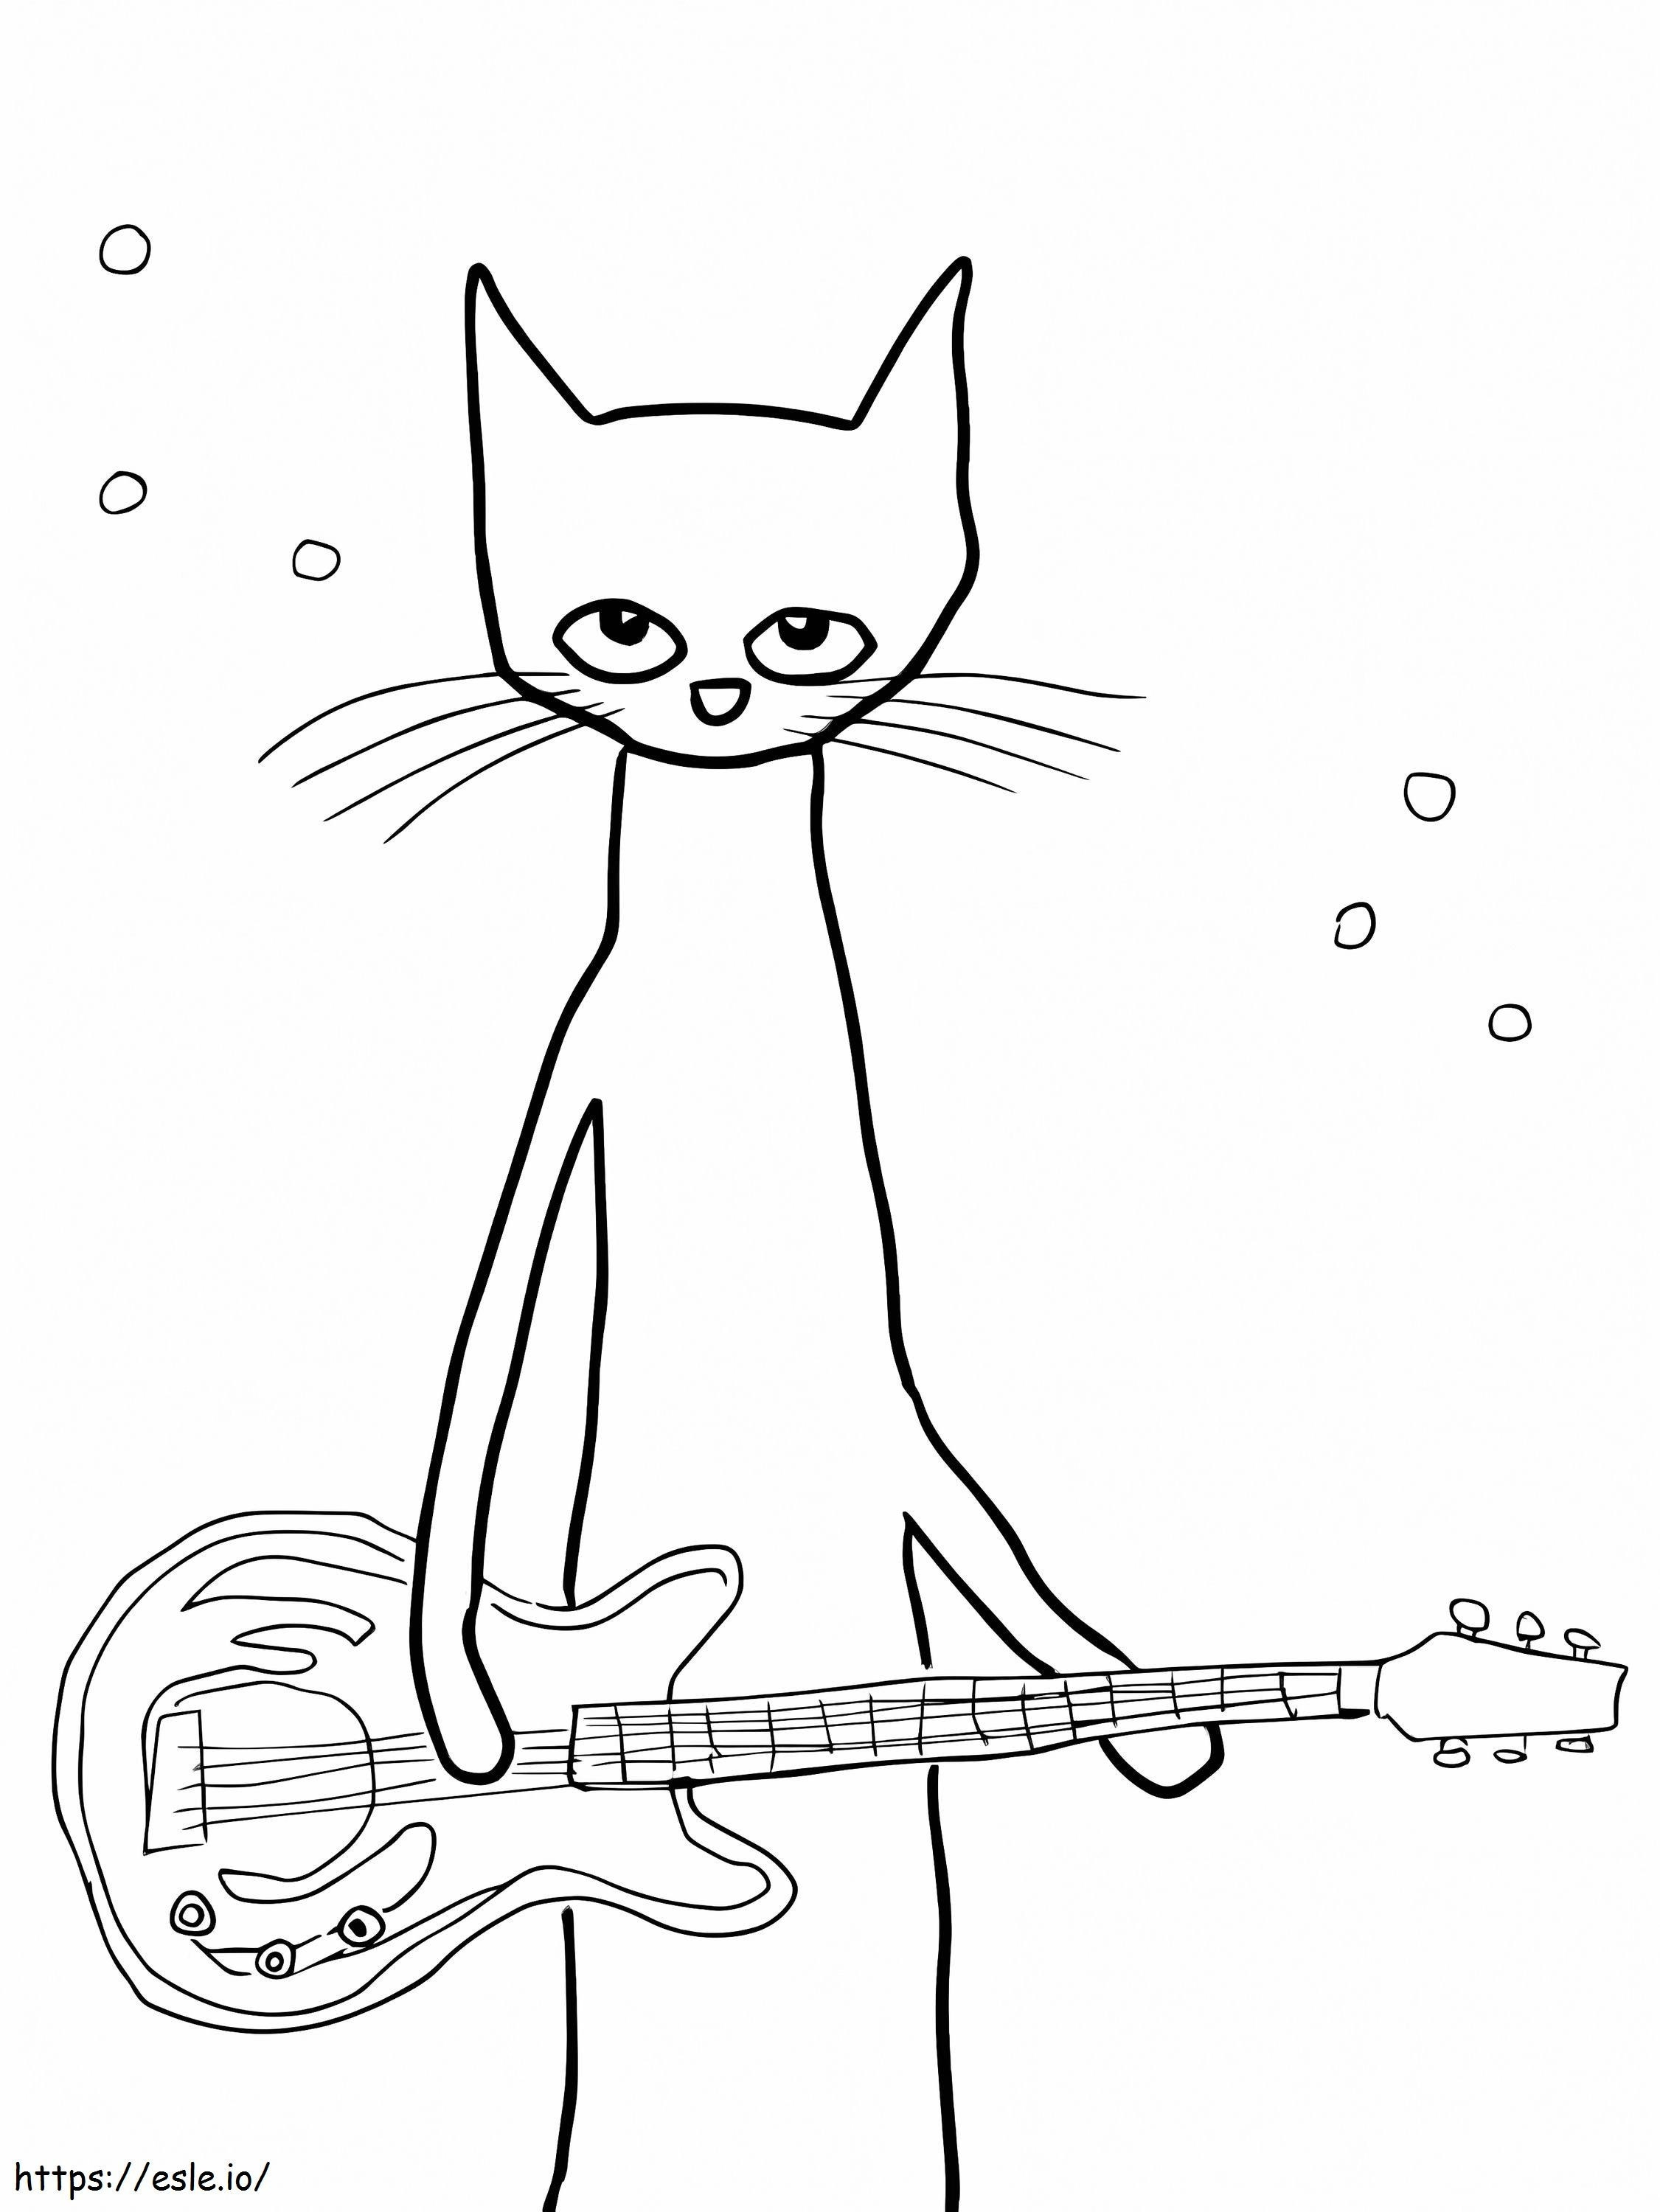 Gitarrist Pete The Cat ausmalbilder